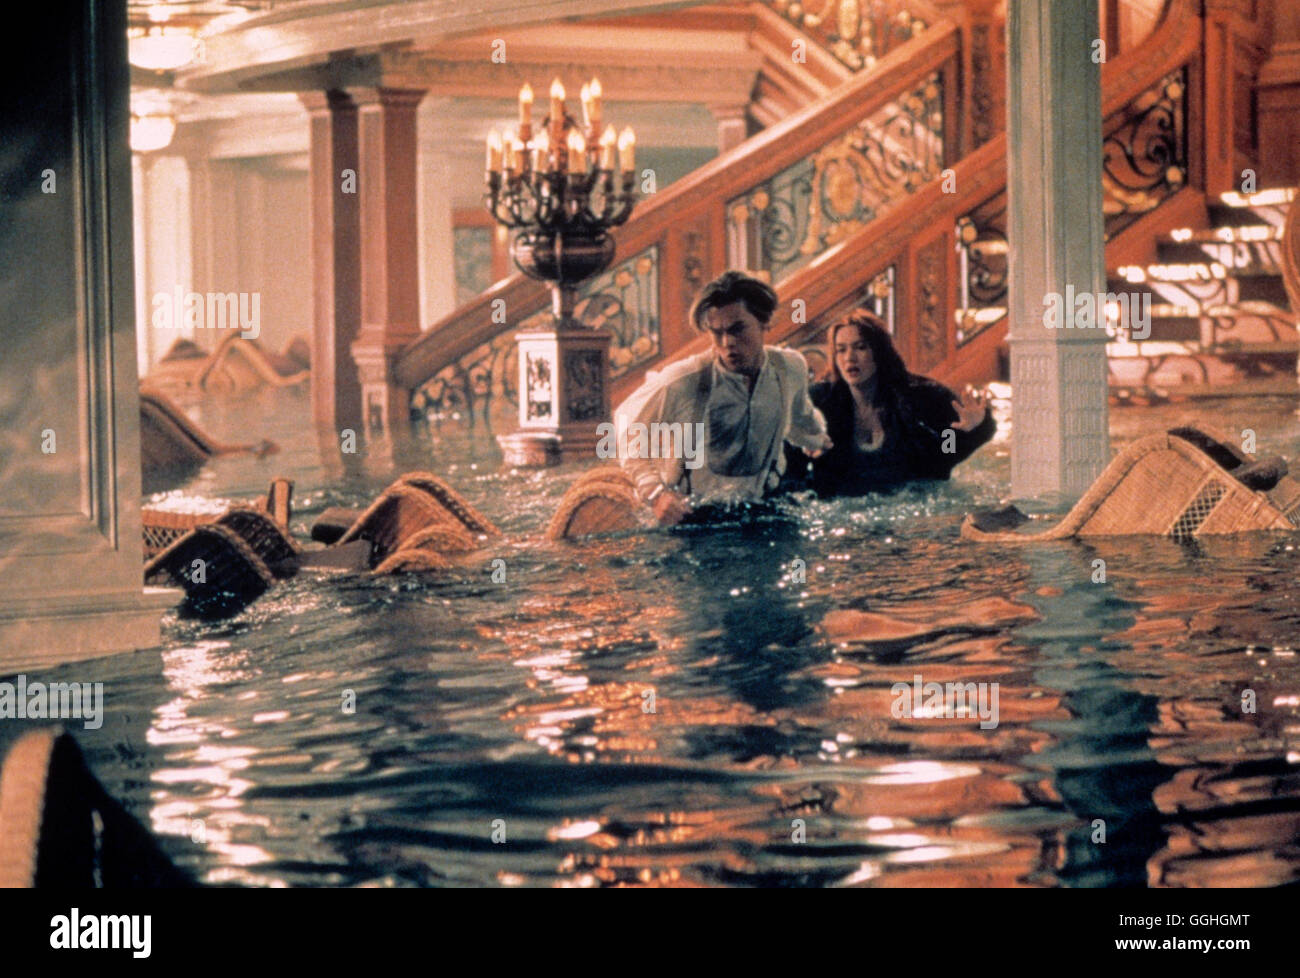 TITANIC / Titanic USA 1997 / James Cameron Szene mit Leonardo Di Caprio (Jack) und Kate Winslet (rosa). Regie: James Cameron aka. Titanic Foto Stock